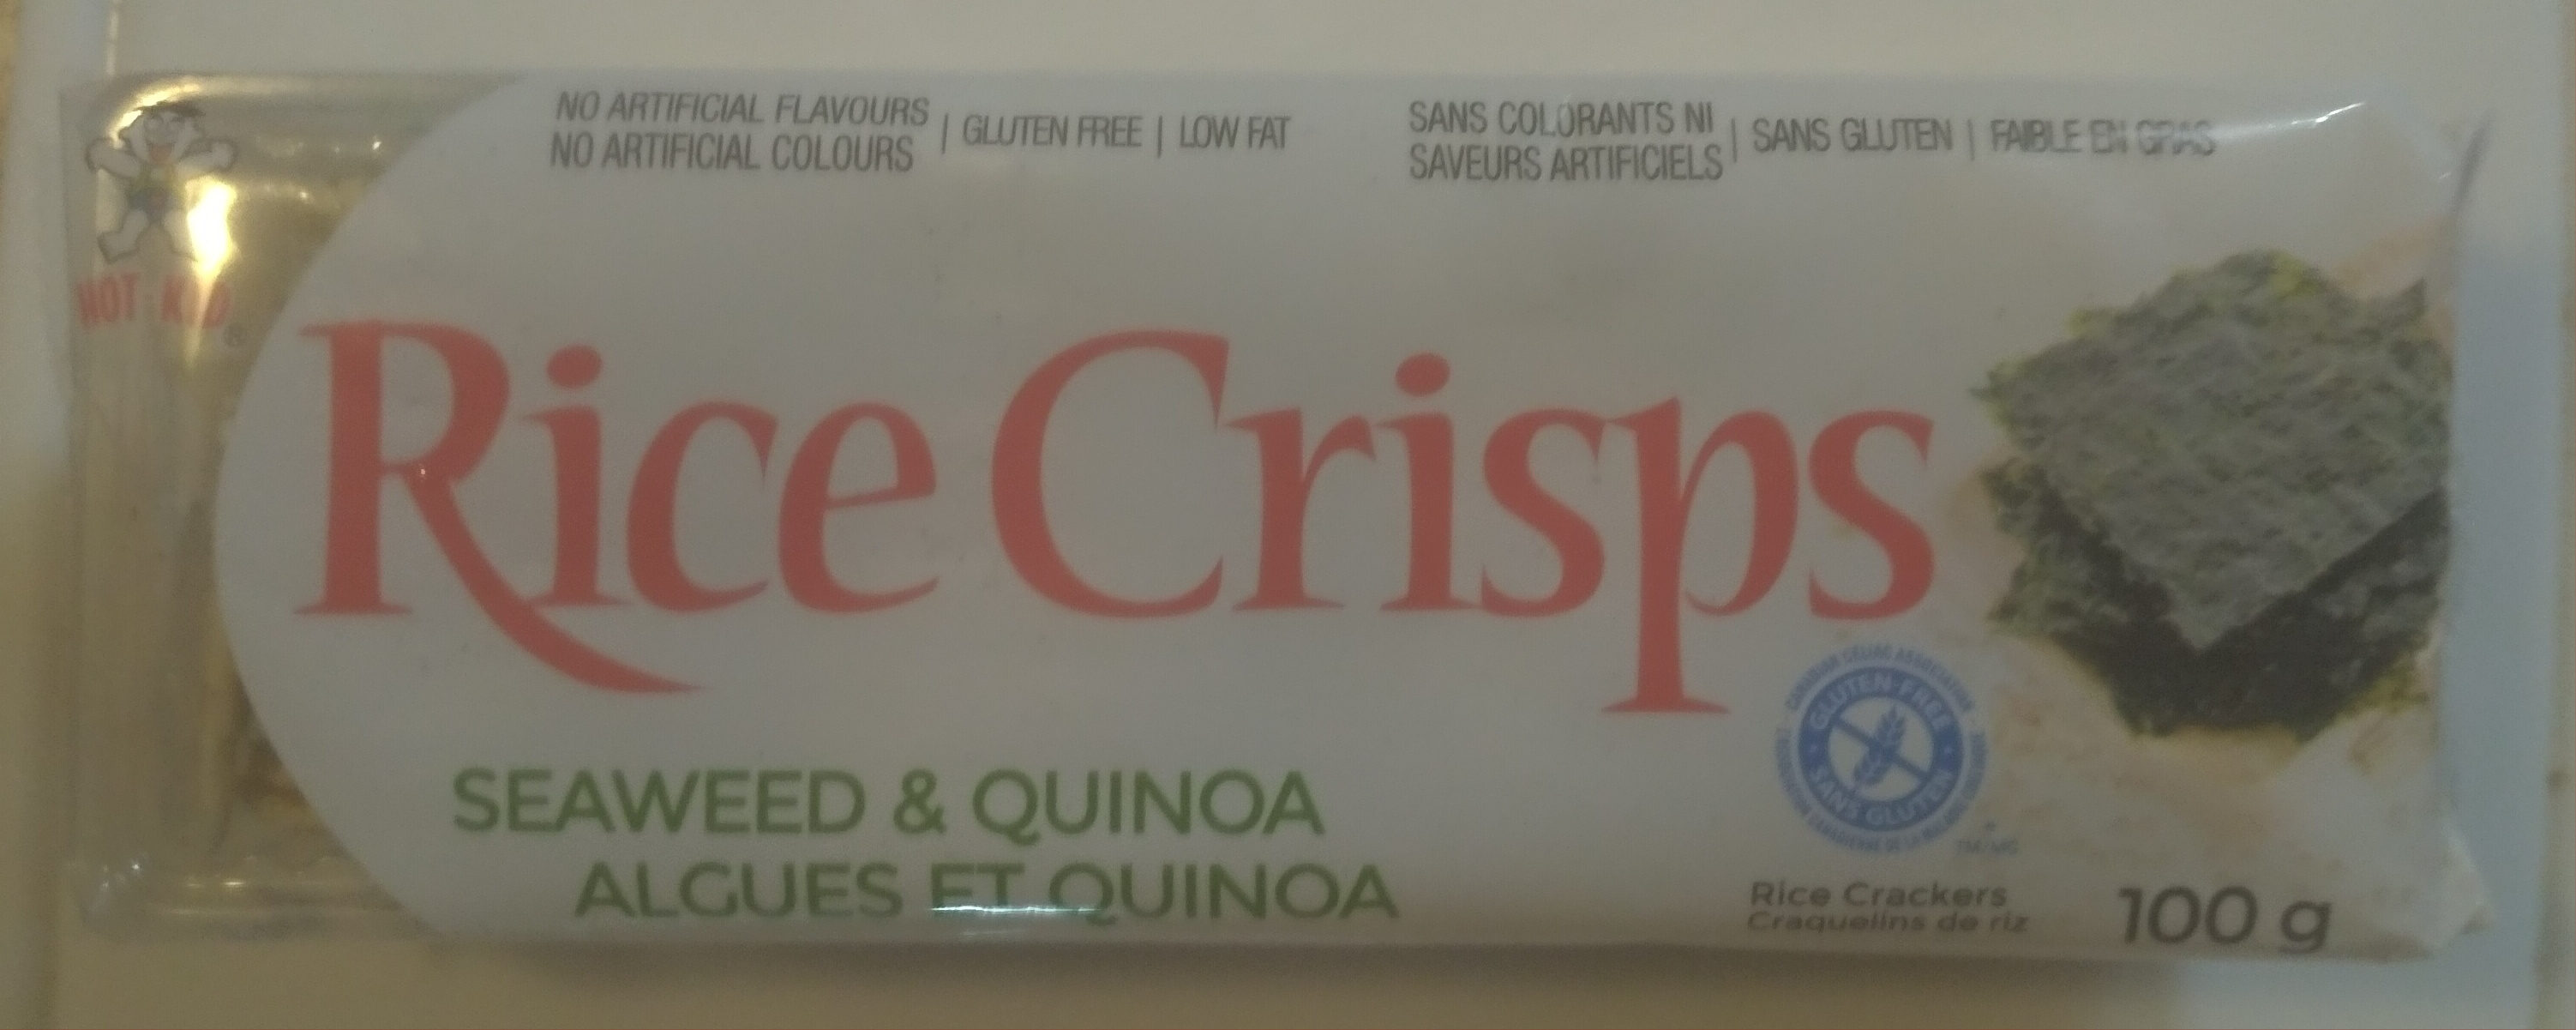 Seaweed & Quinoa Rice Crisps - Prodotto - en